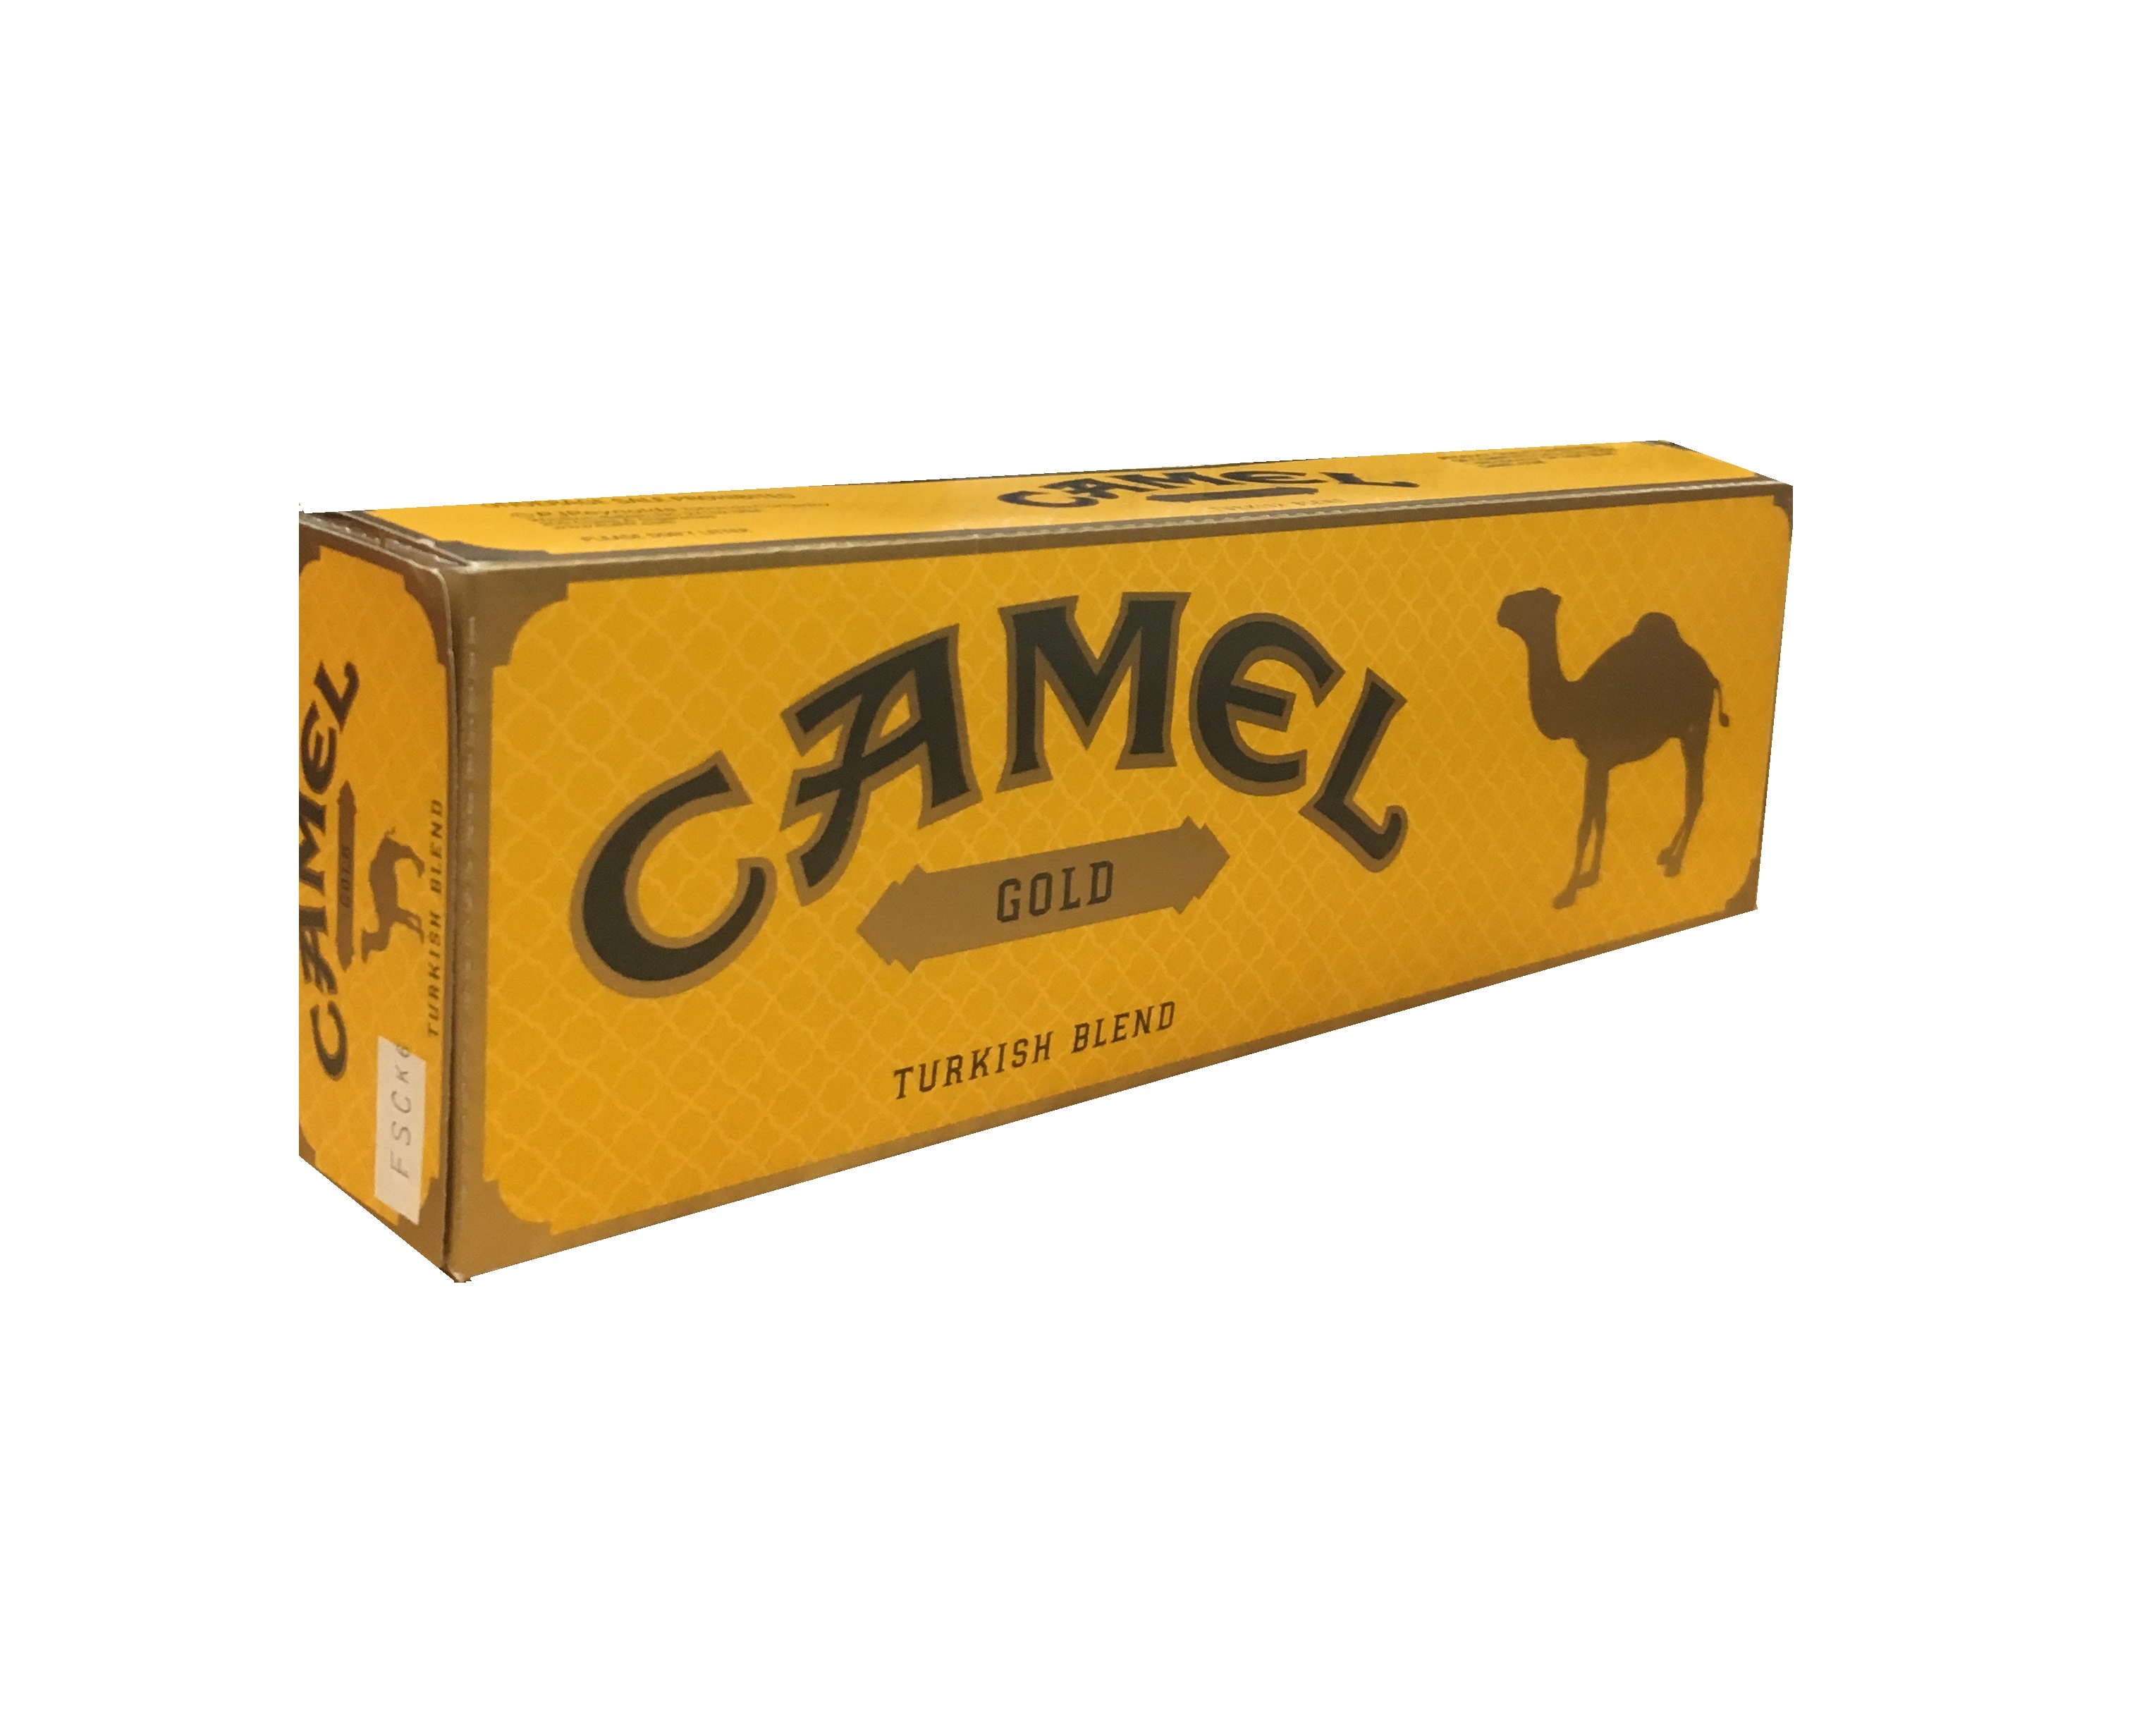 Camel gold box